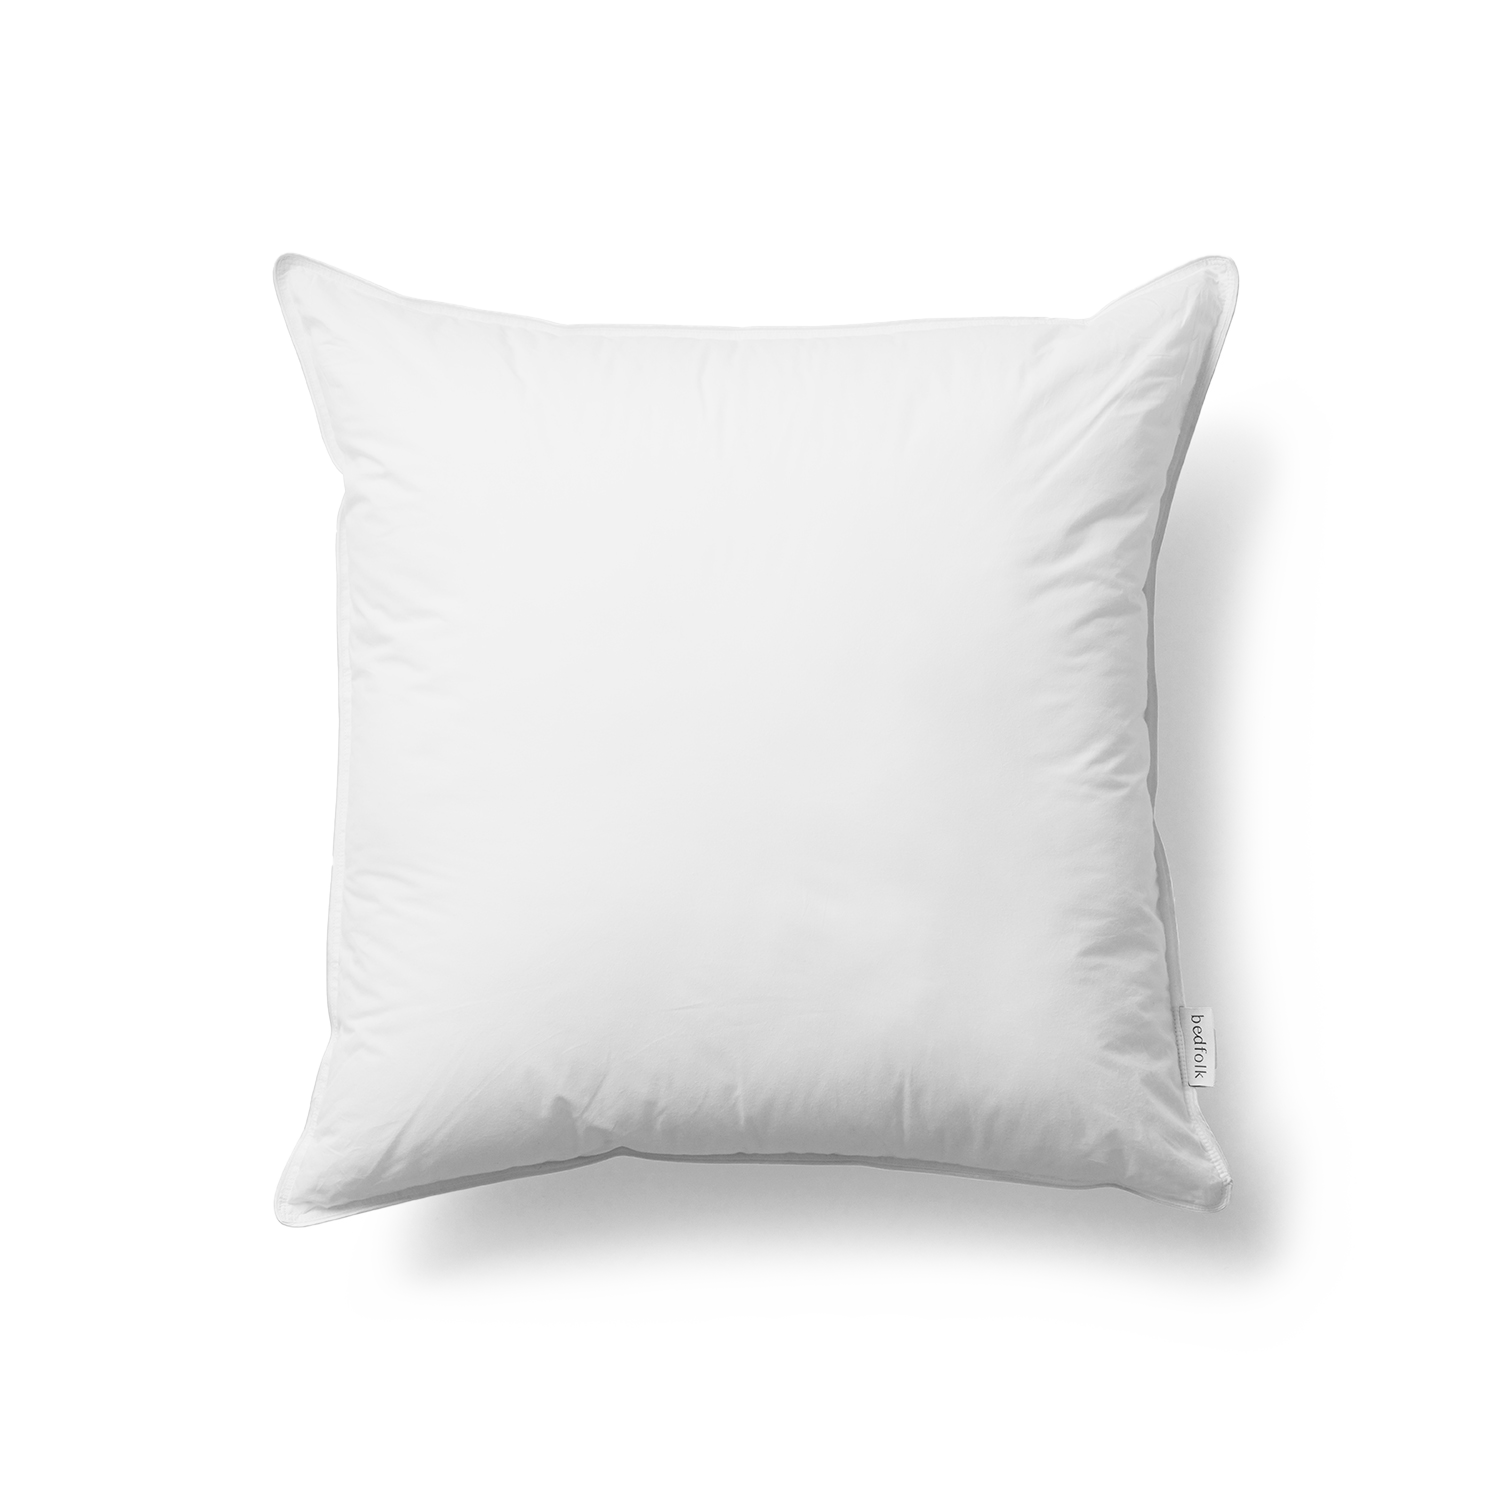 The Down Alternative Pillow